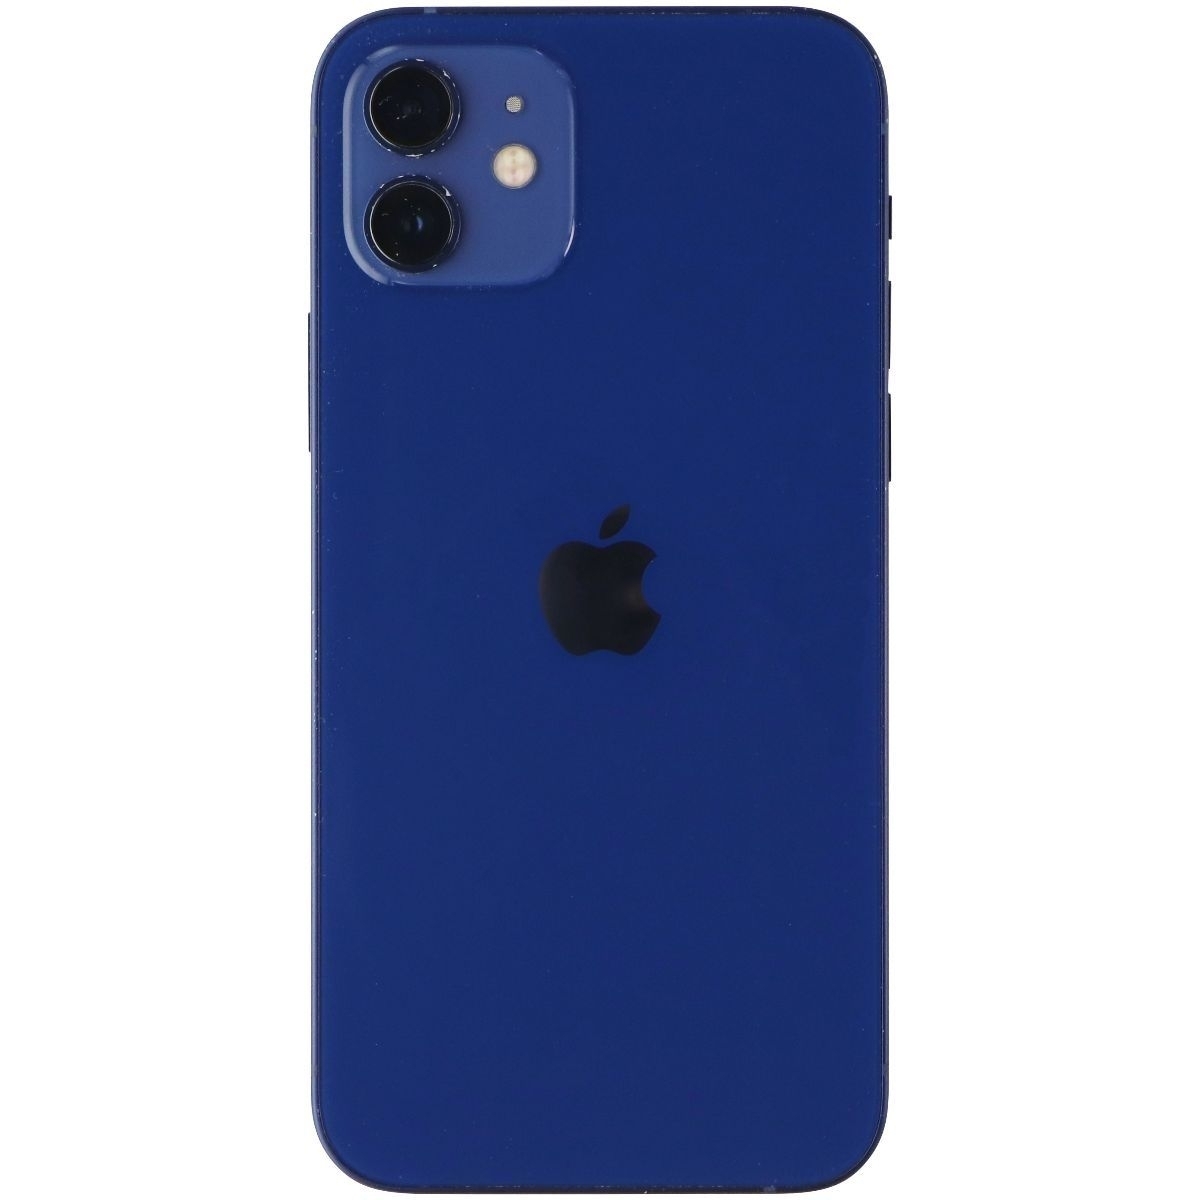 Apple IPhone 12 (6.1-inch) Smartphone (A2172) Unlocked - 256GB / Blue